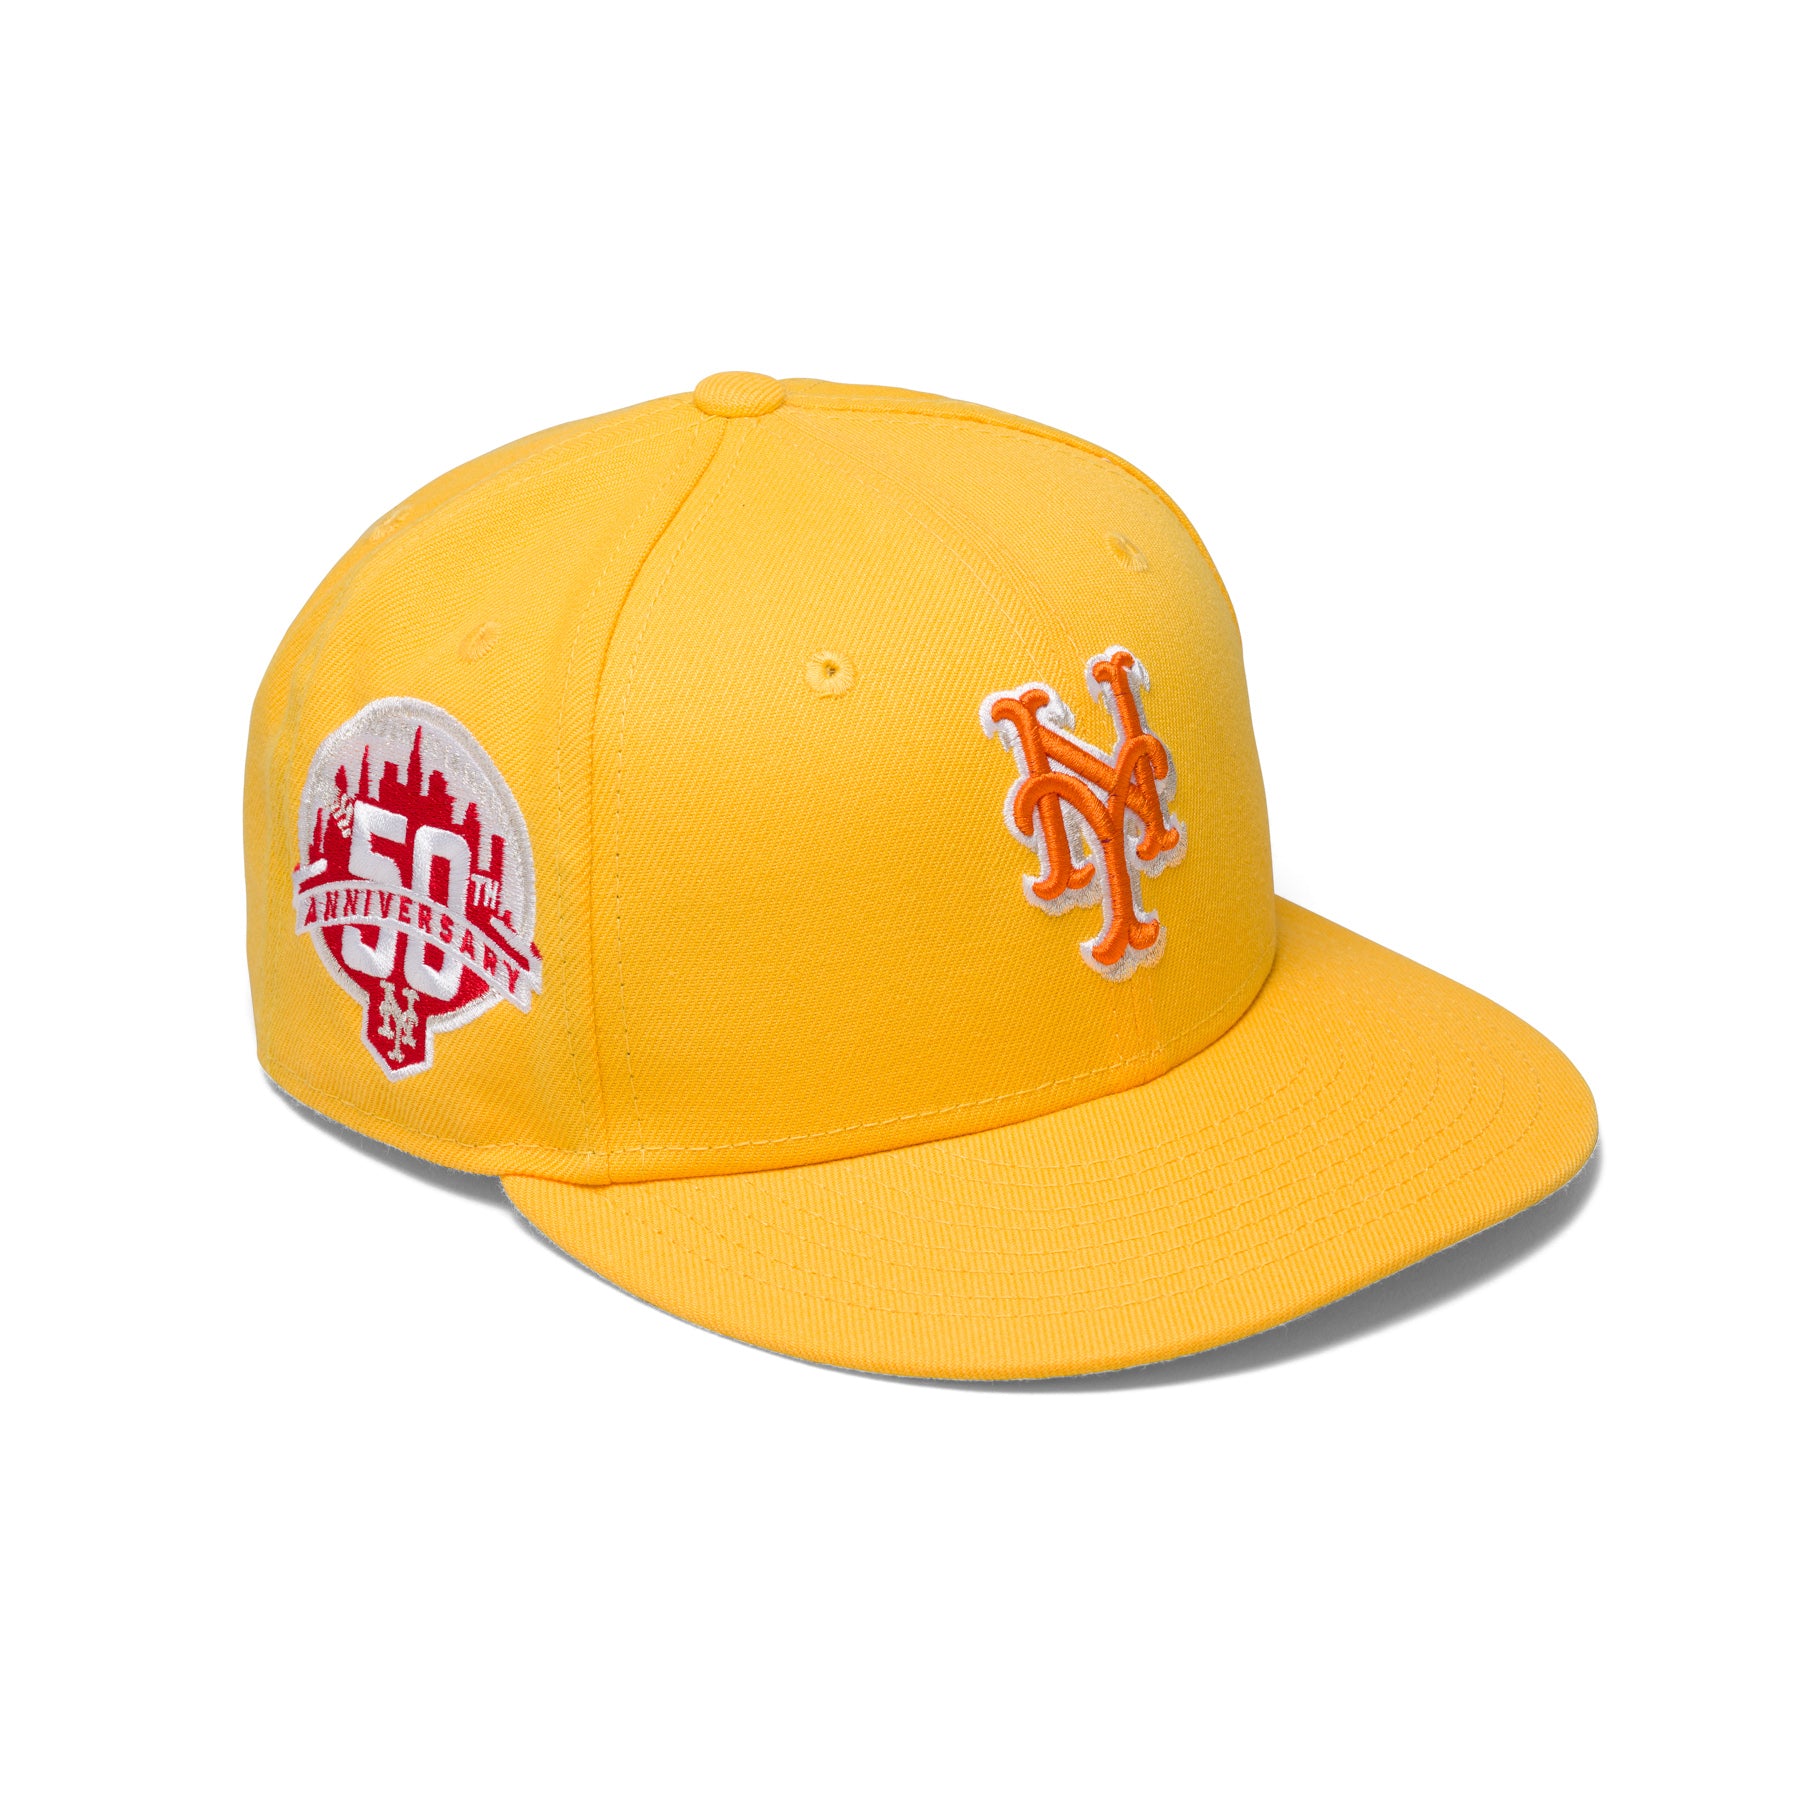 Concepts x New Era 5950 New York Mets 50th Anniversary (Yellow) 7 5/8